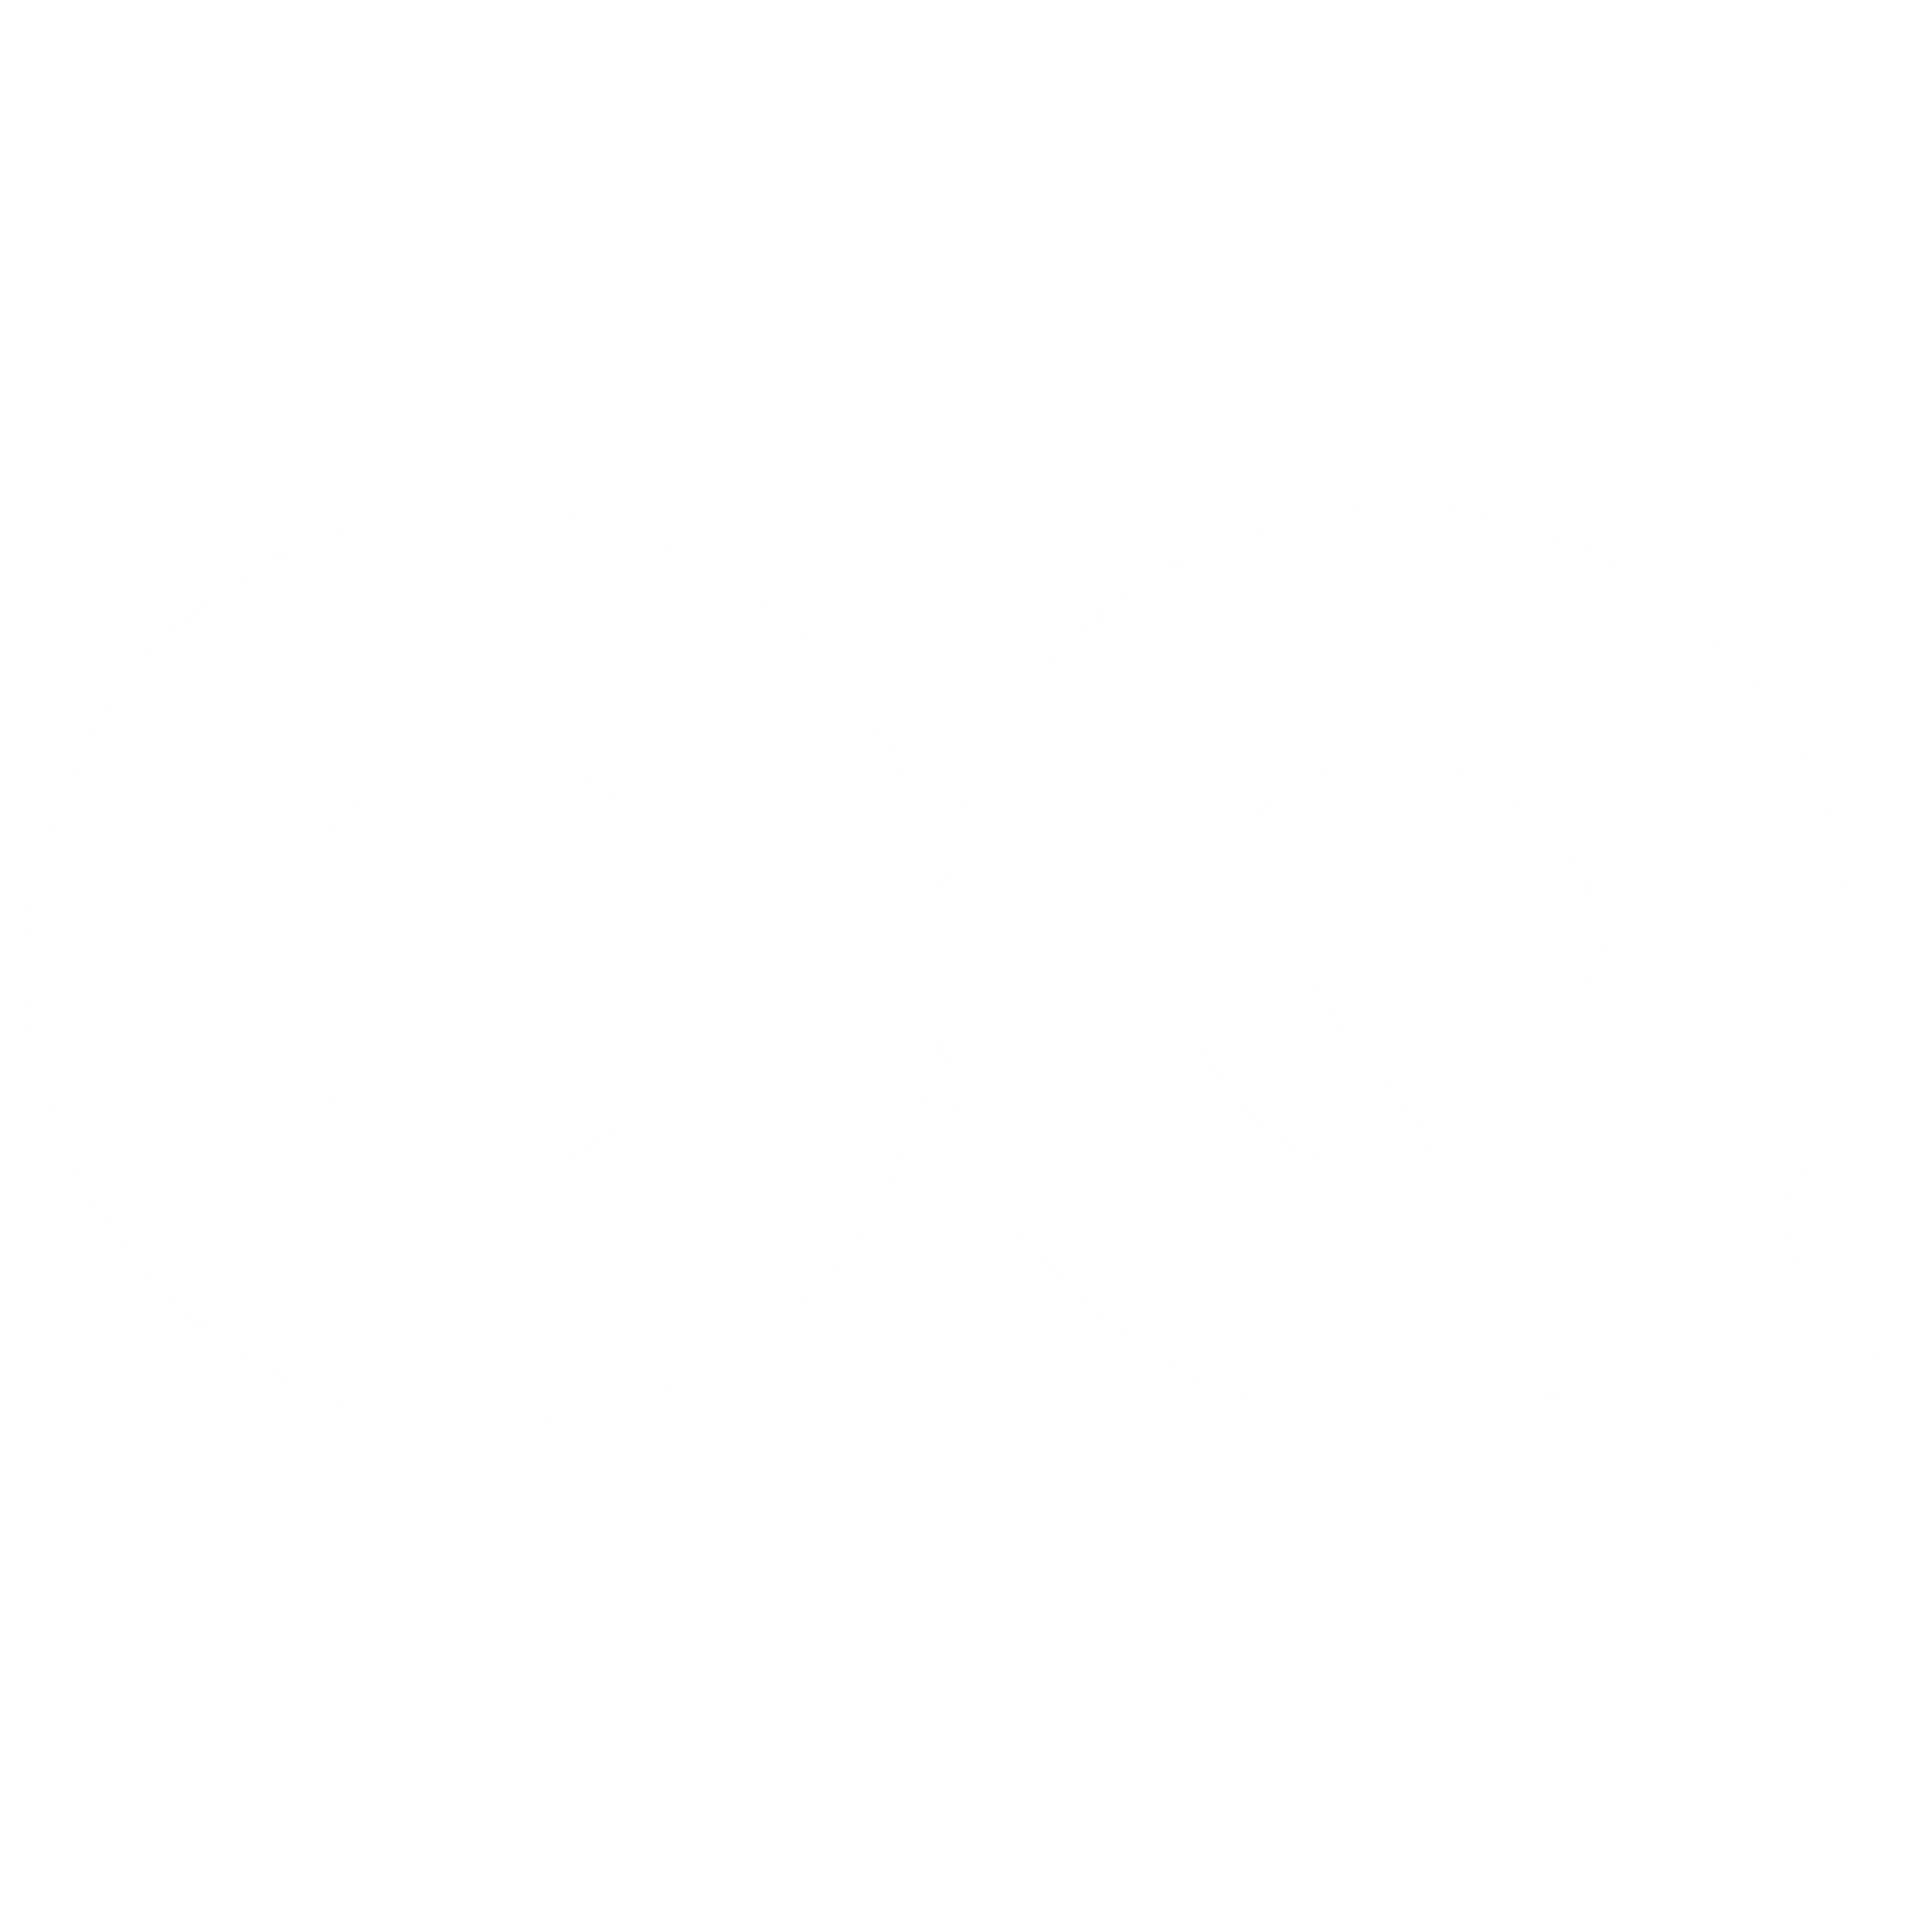 GQ Magazine Logo - GQ Magazine Logo PNG Transparent & SVG Vector - Freebie Supply